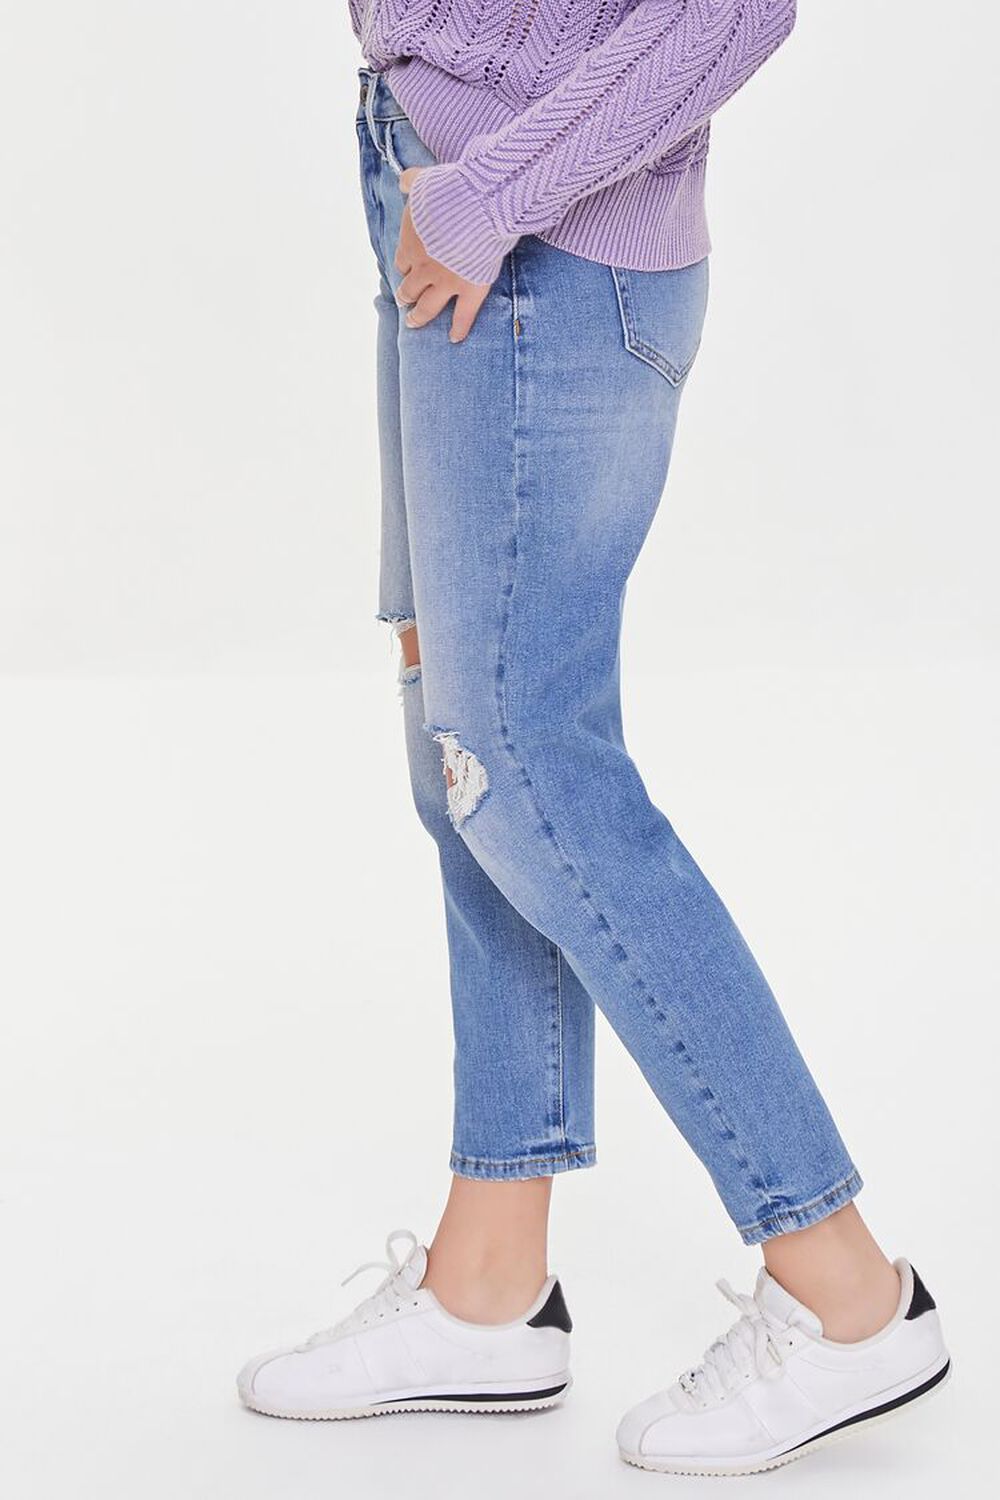 MEDIUM DENIM Hemp 4% Distressed Ankle-Cut Mom Jeans, image 3